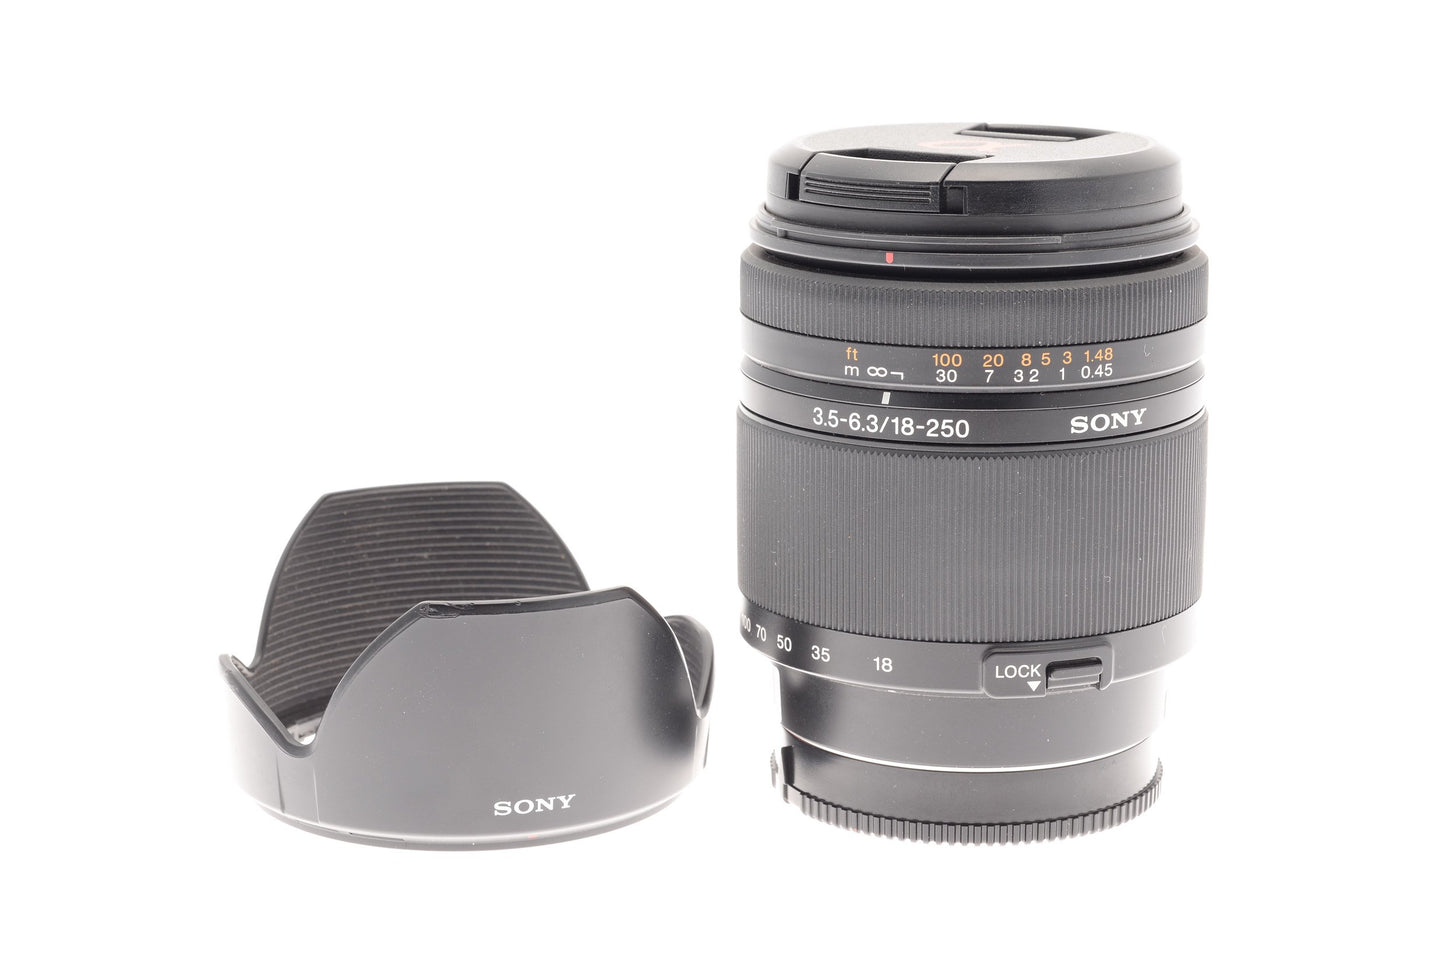 Sony 18-250mm f3.5-6.3 DT - Lens